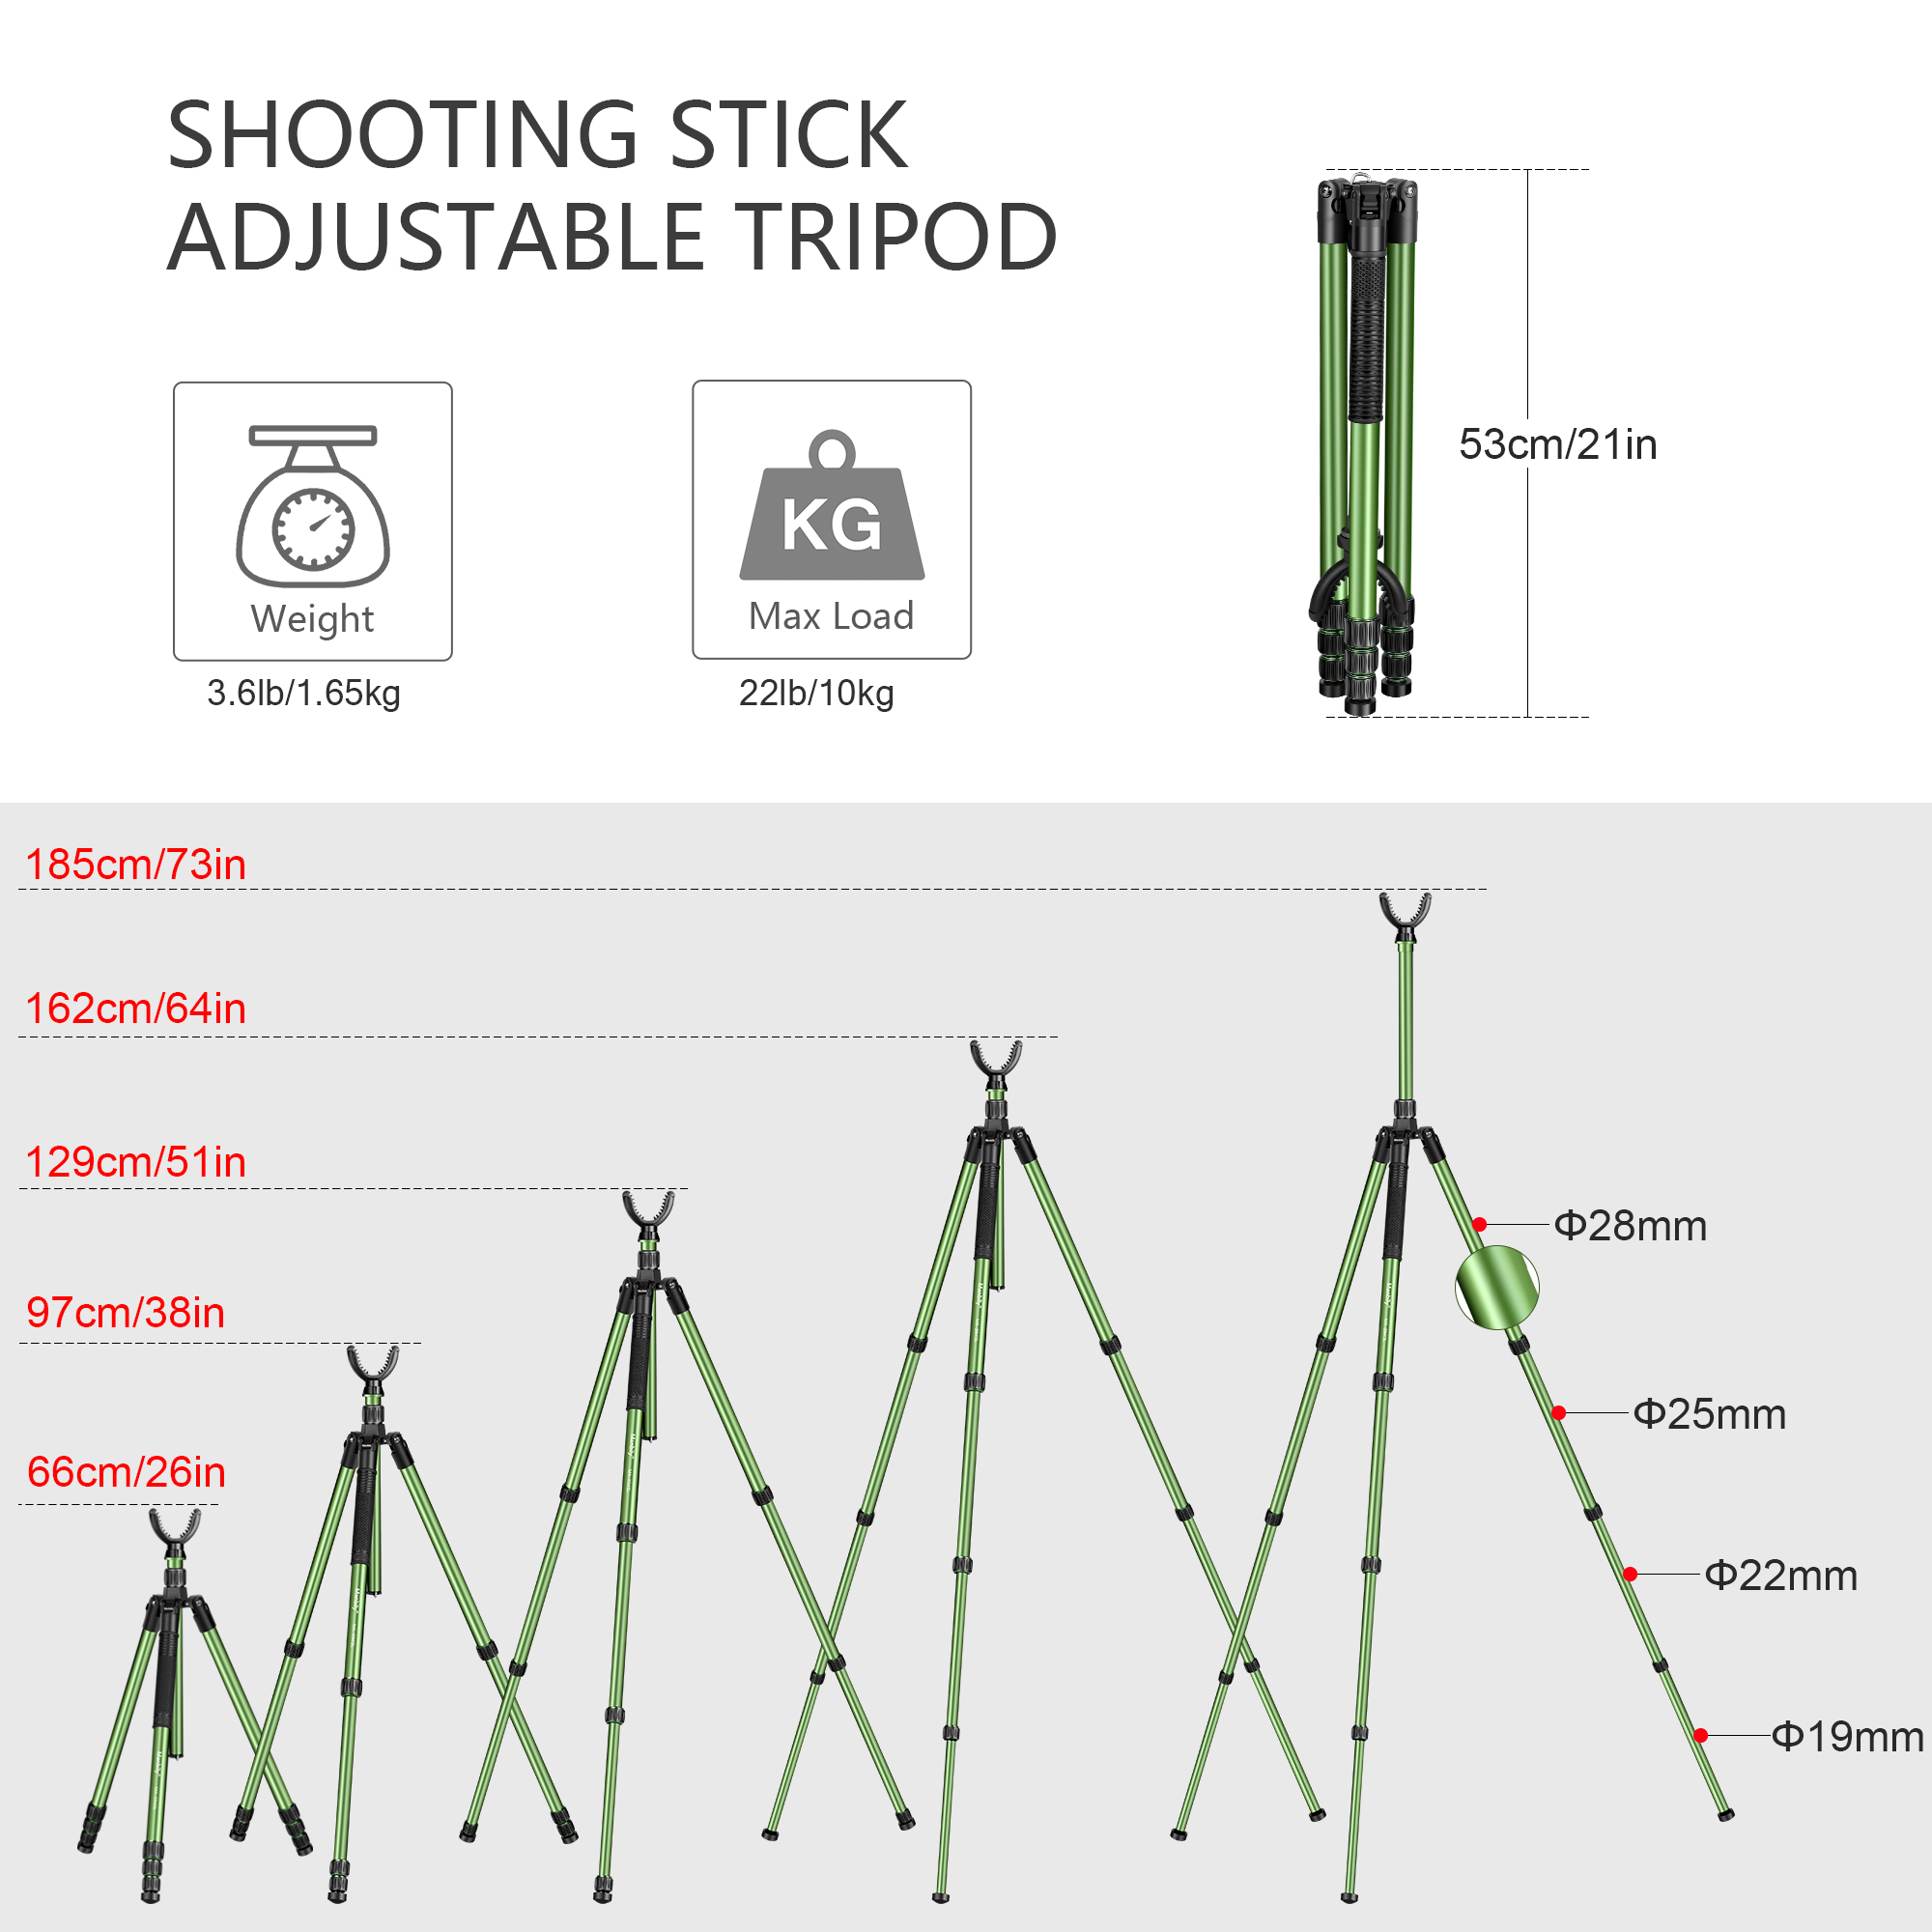 Manbily 73 Inches Adjustable Aluminum Hunting tripod Shooting Stick Tripod Shooting Rest with U Shaped Yoke